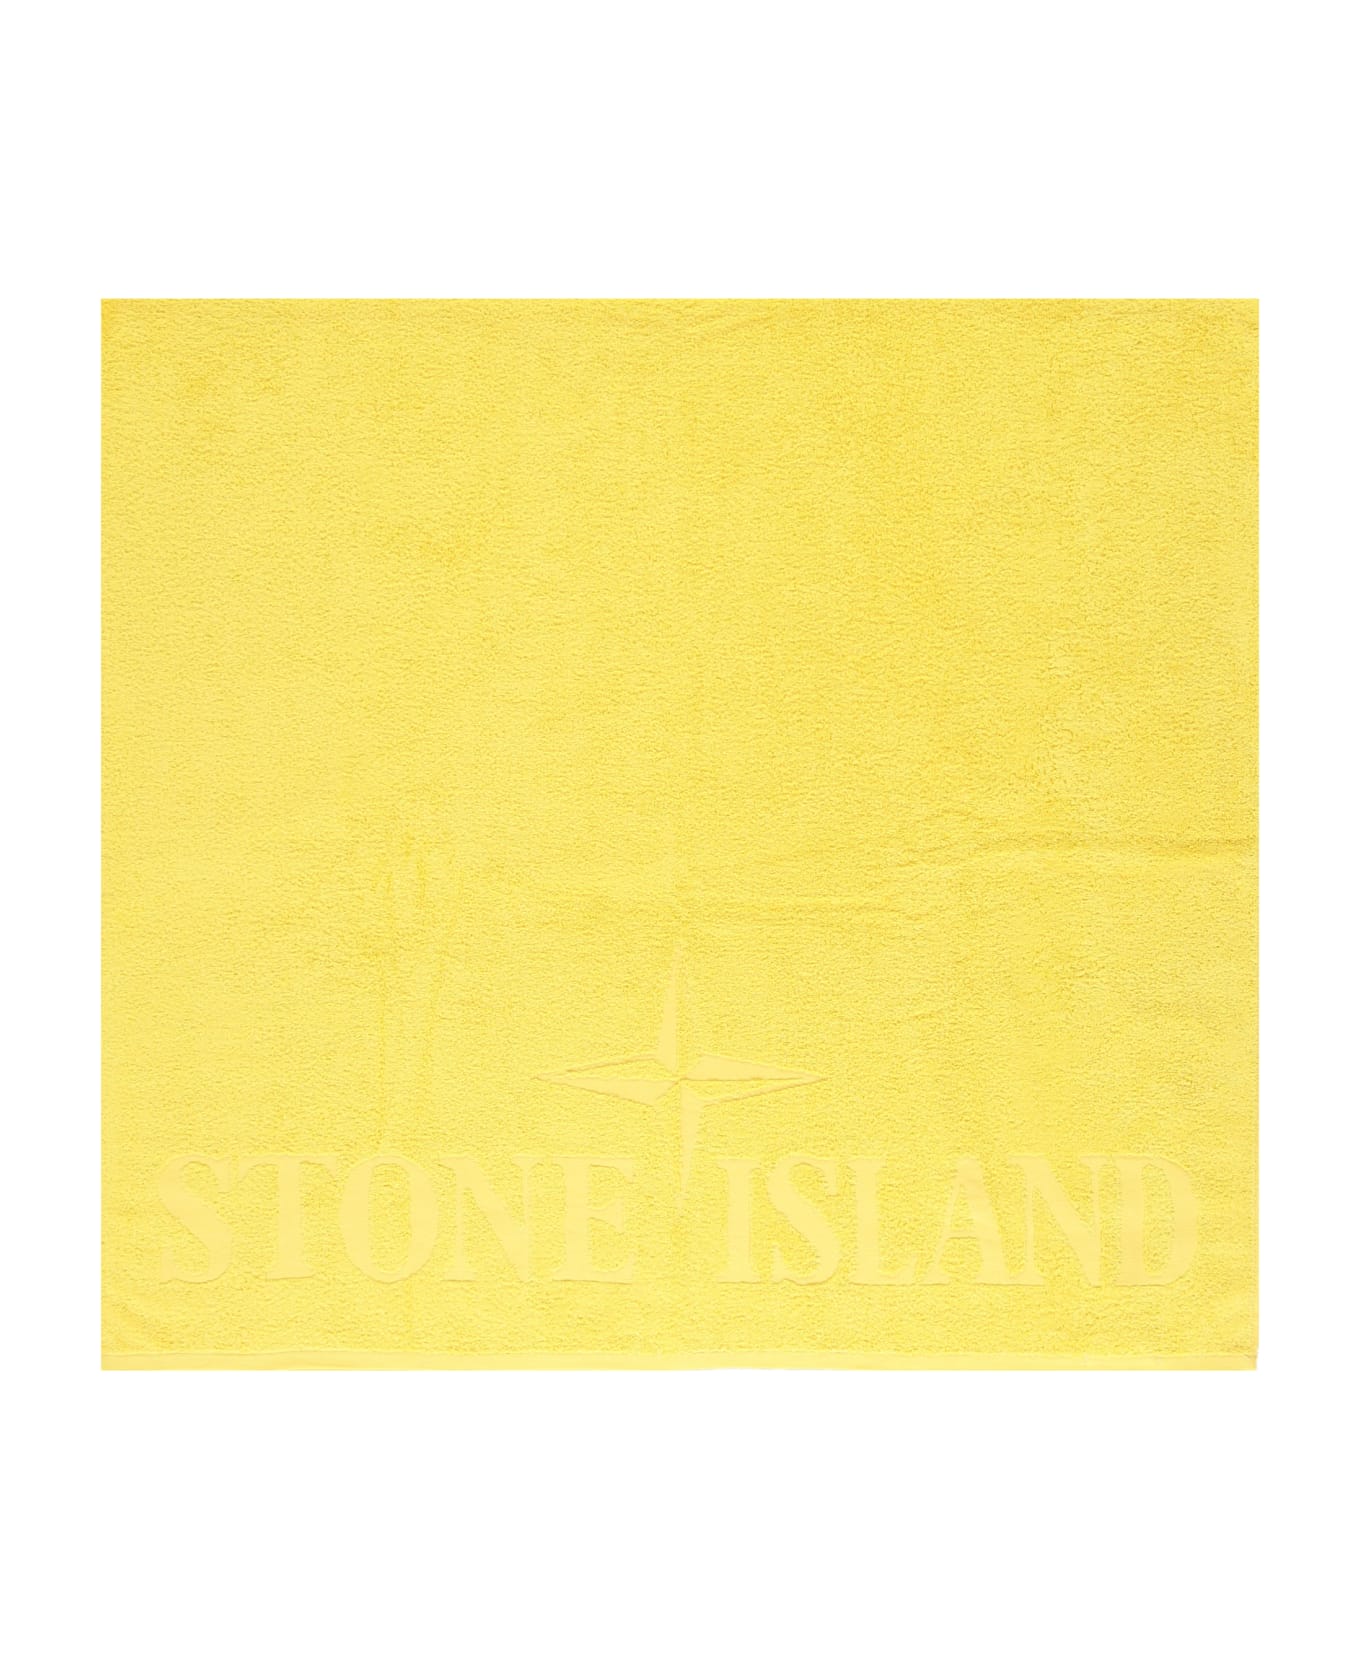 Stone Island Cotton Beach Towel - Yellow